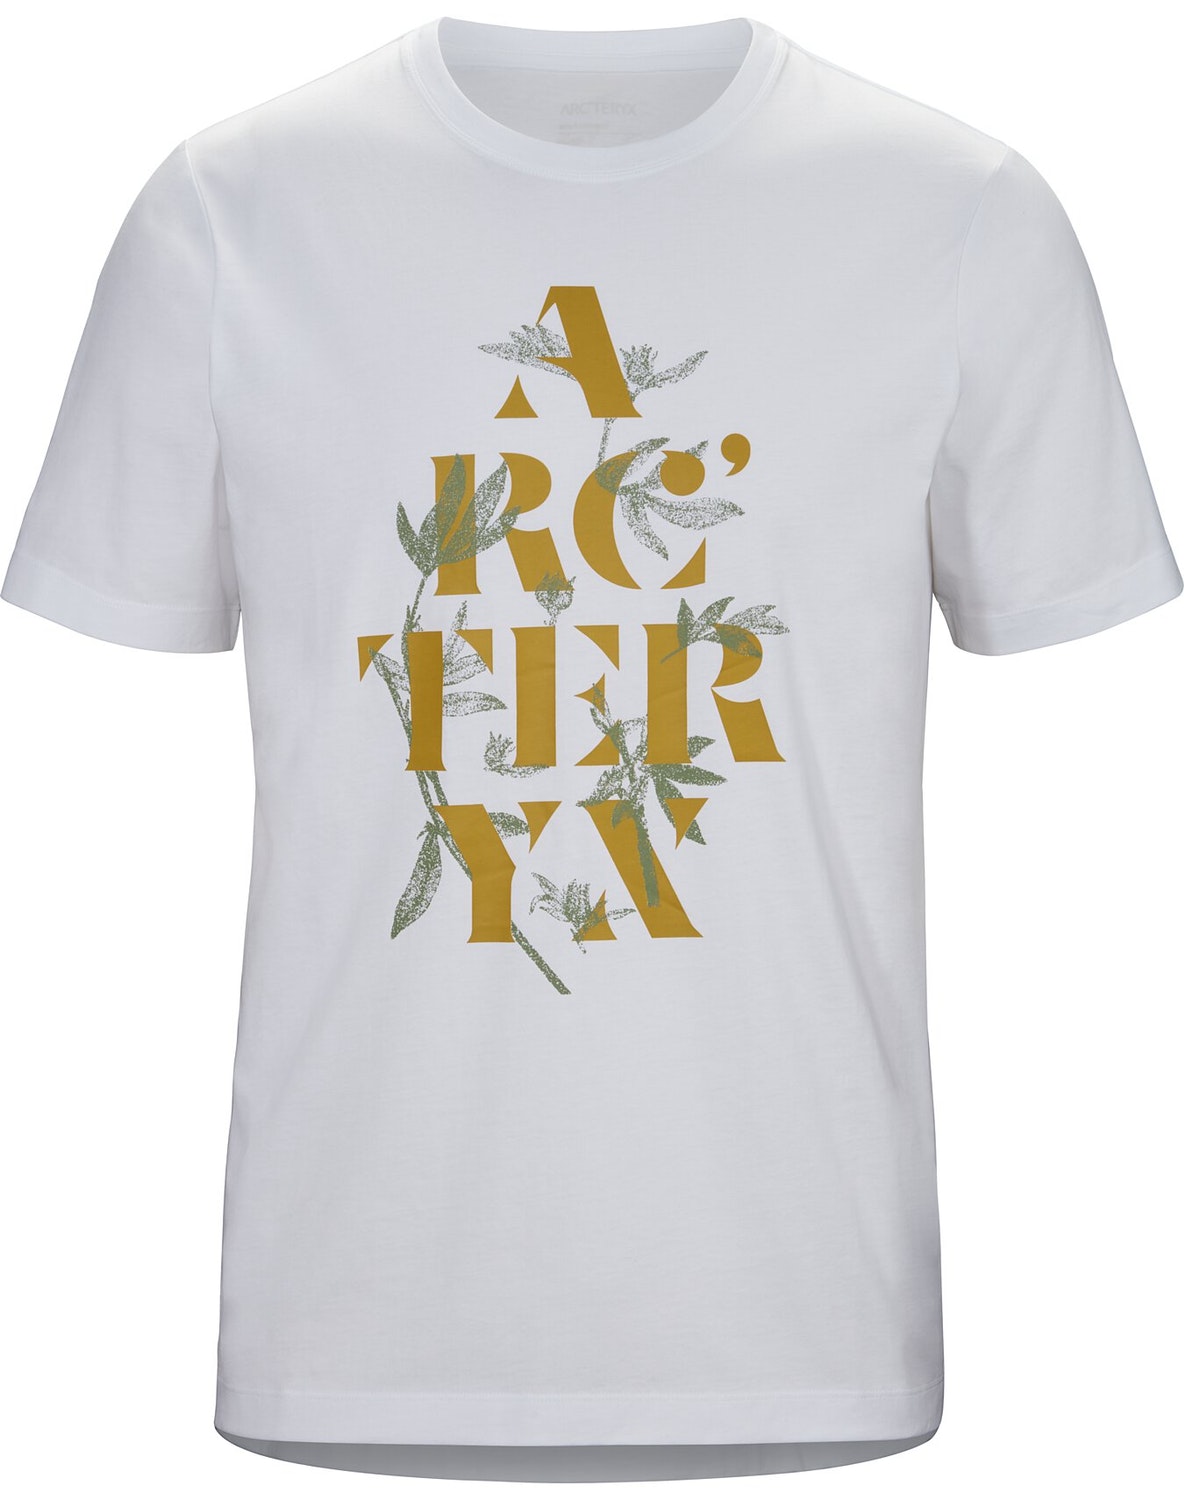 T-shirt Arc'teryx Winter Foliage Uomo Bianche - IT-36541396